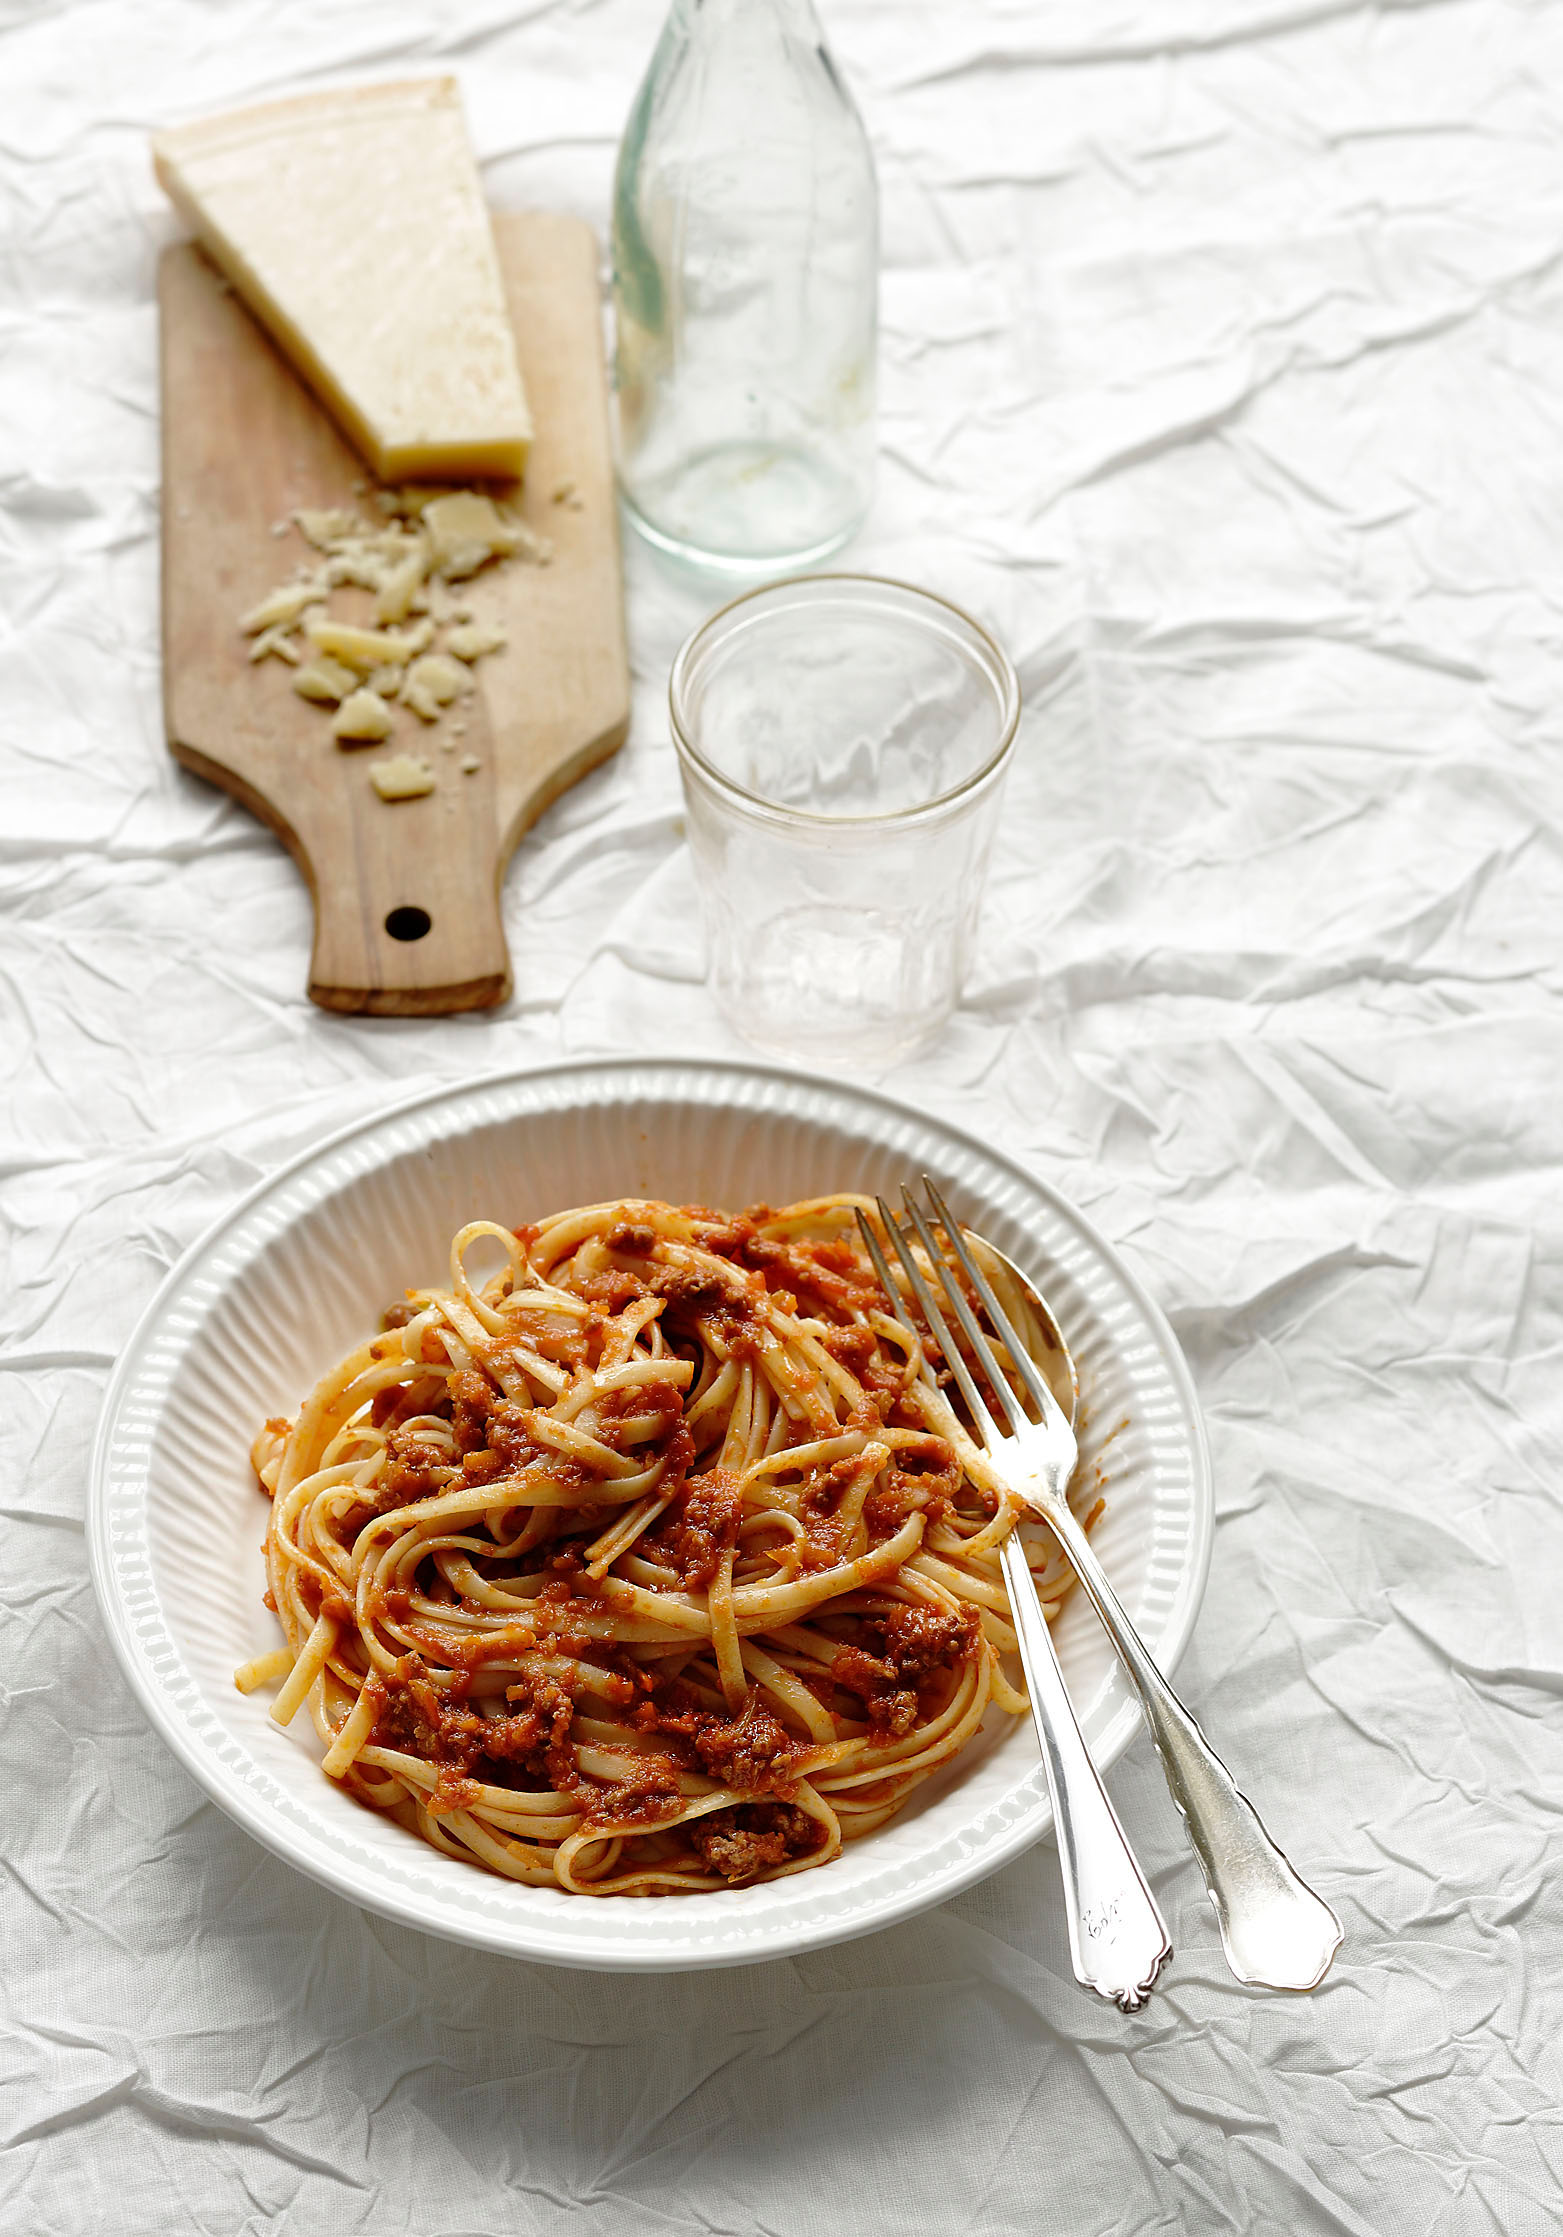 ÎÏÎ¿ÏÎ­Î»ÎµÏÎ¼Î± ÎµÎ¹ÎºÏÎ½Î±Ï Î³Î¹Î± spaghetti bolognese